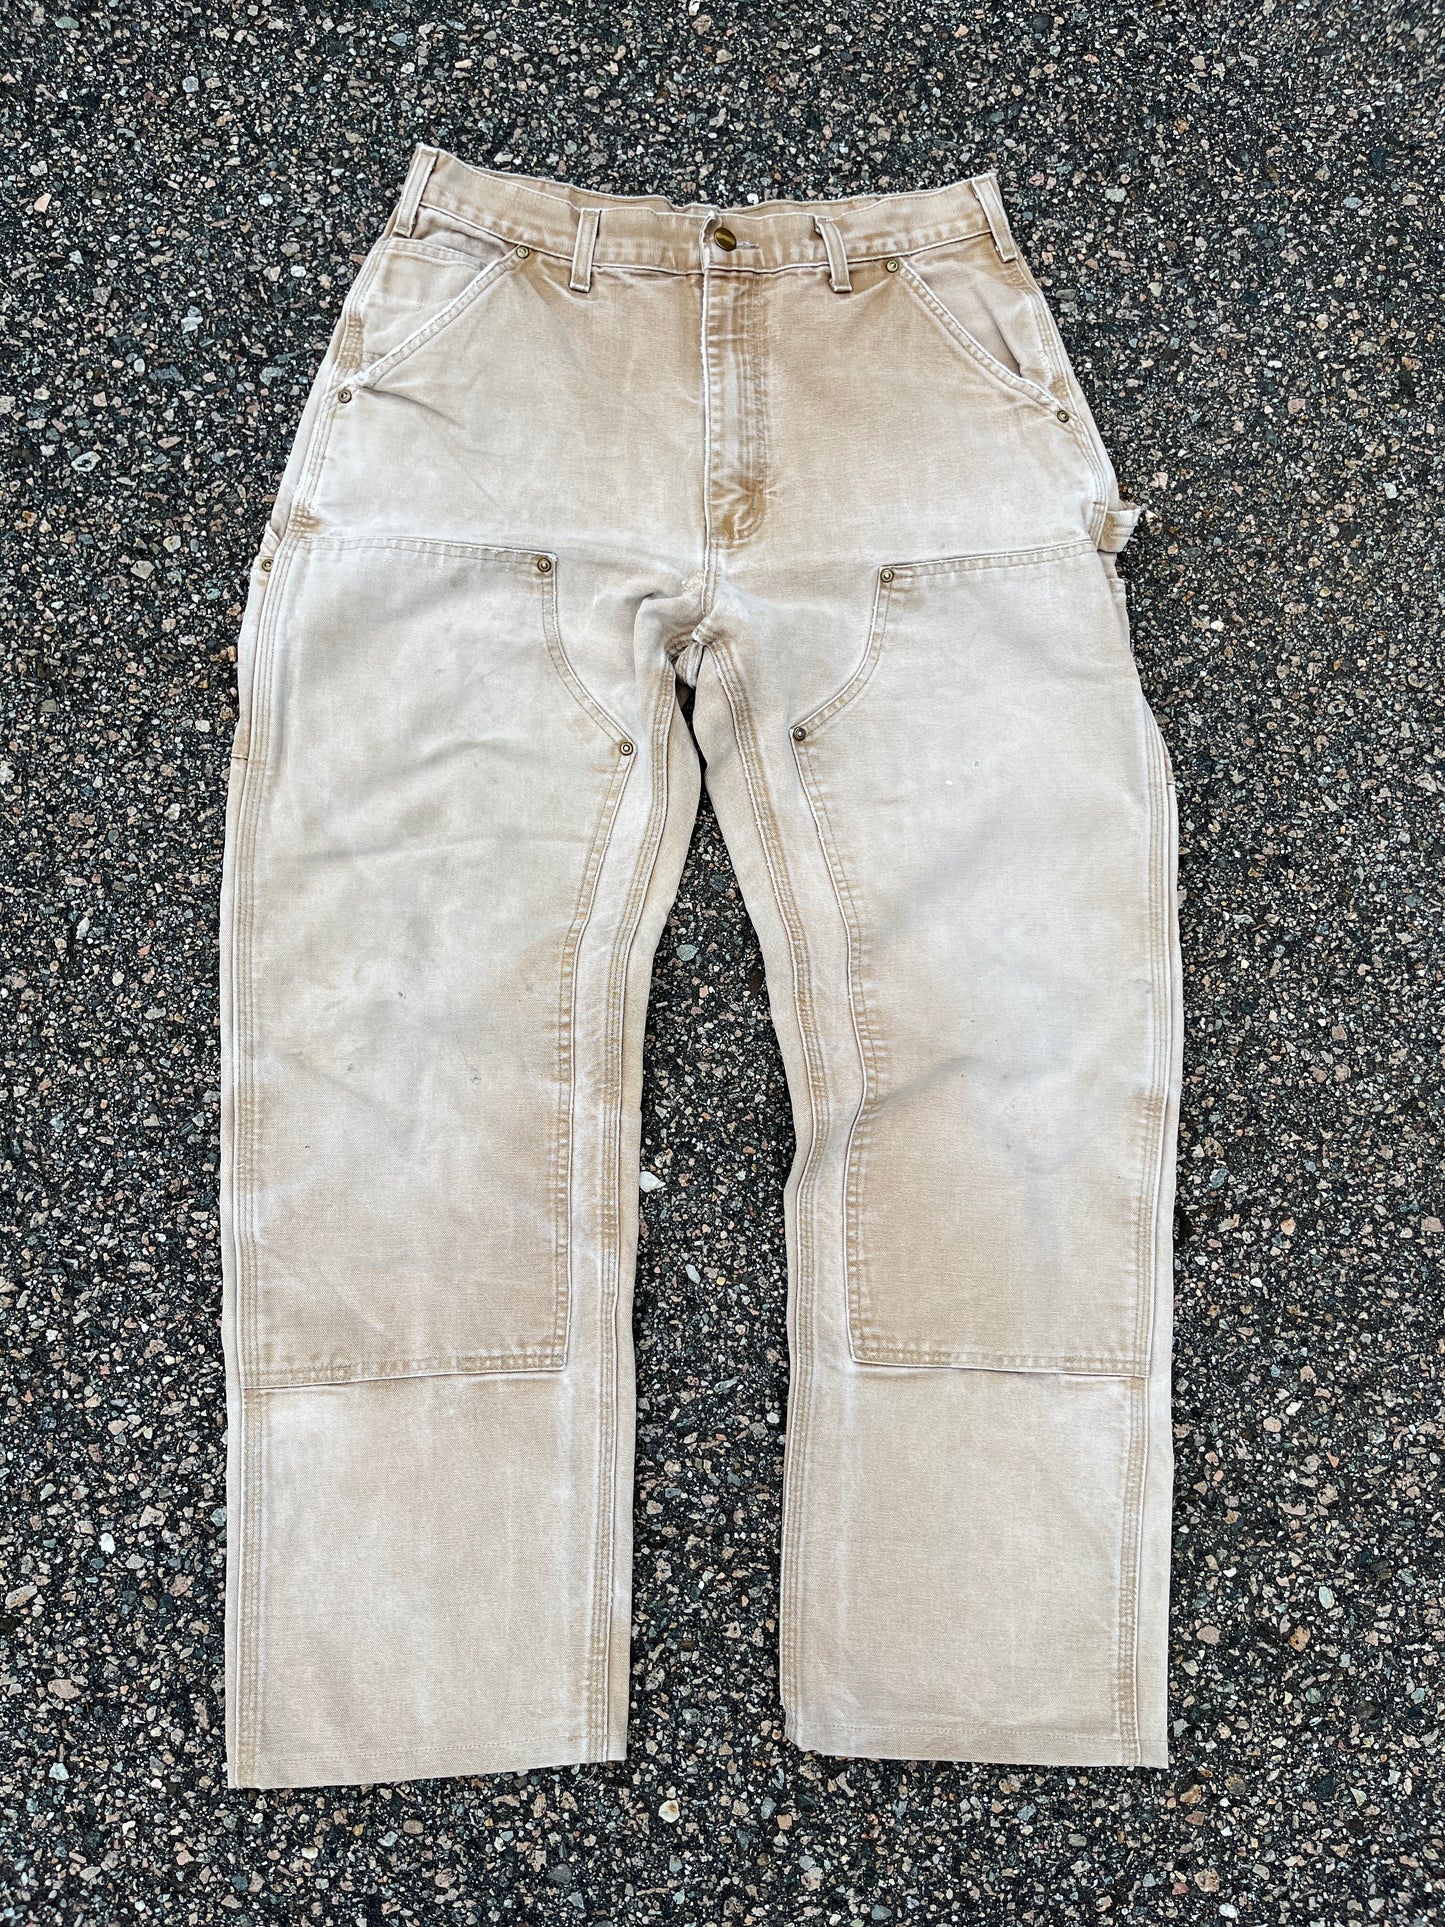 Faded Tan Carhartt Double Knee Pants - 31 x 29